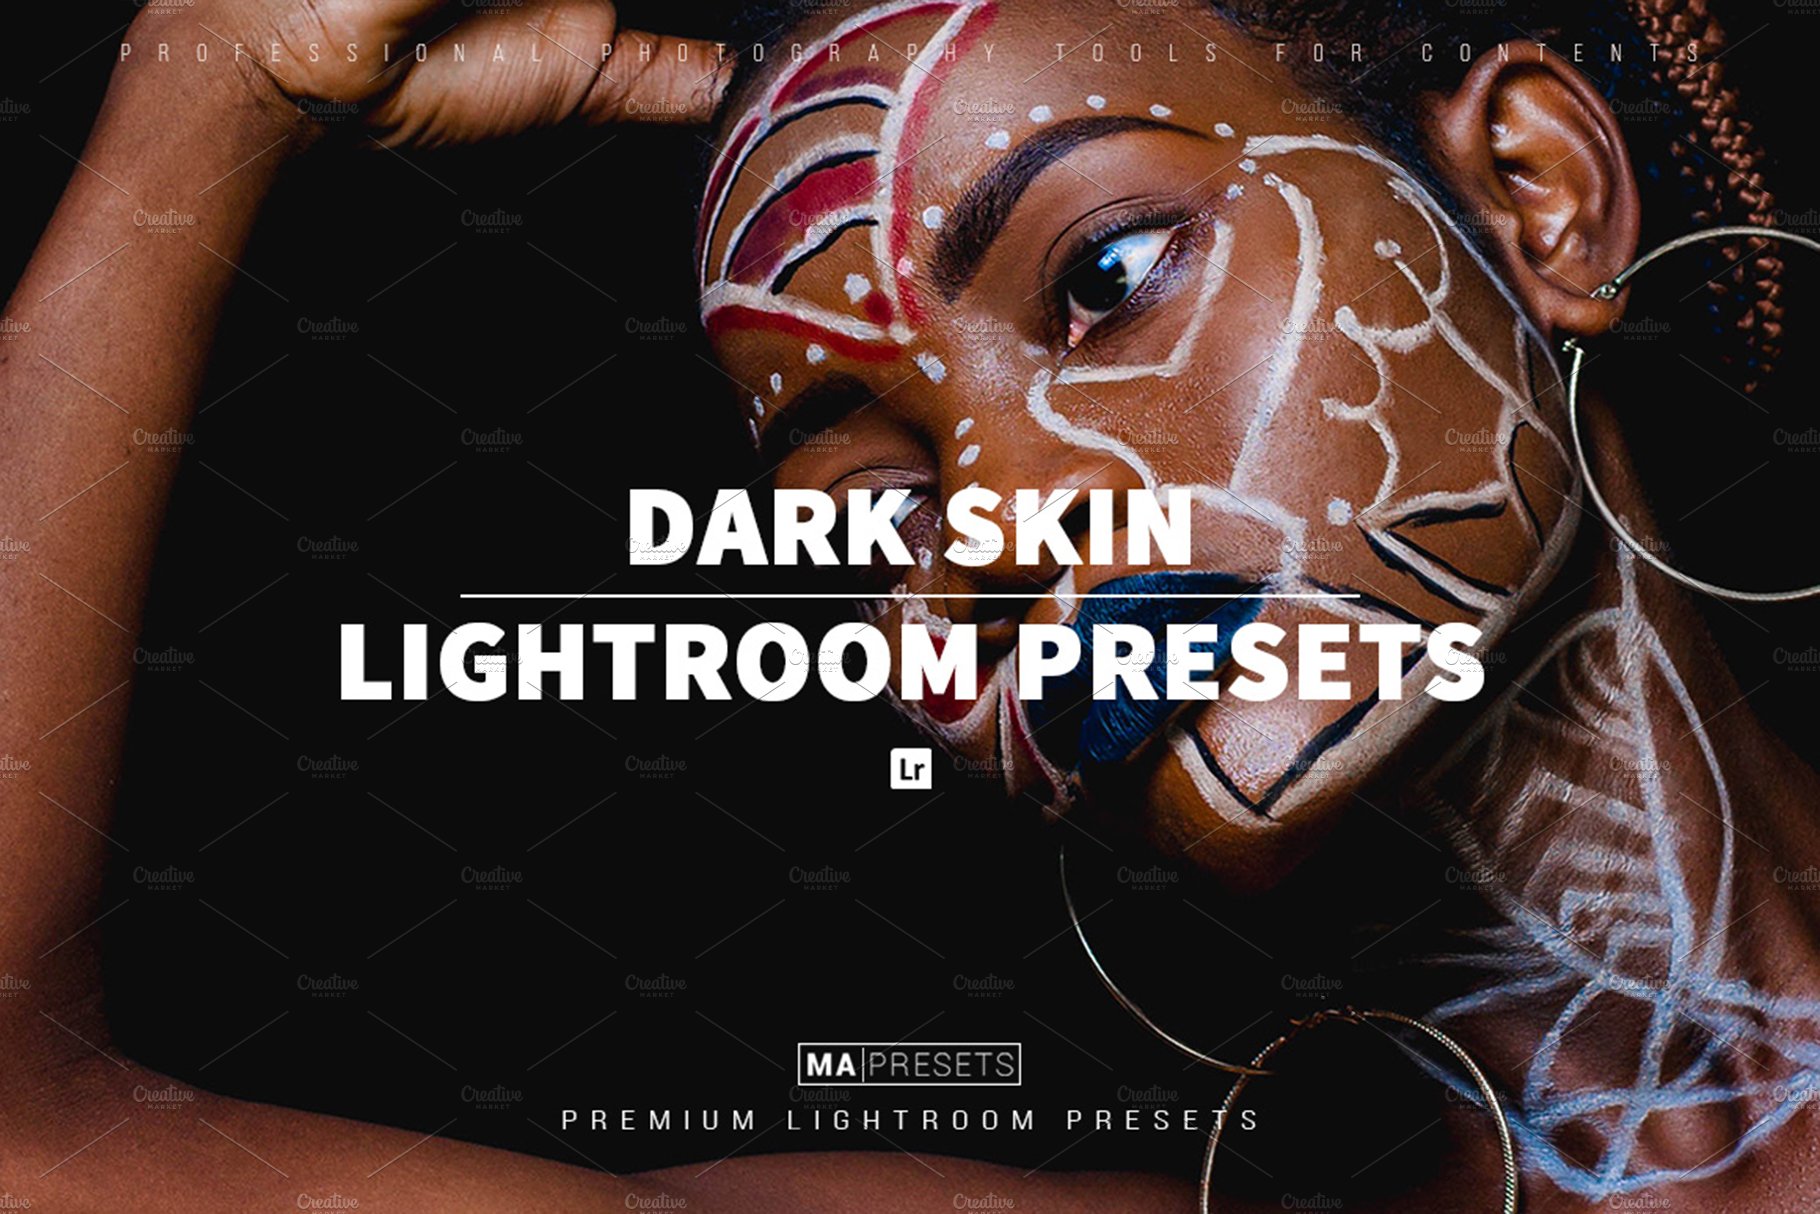 10 DARK SKIN Lightroom Presetscover image.